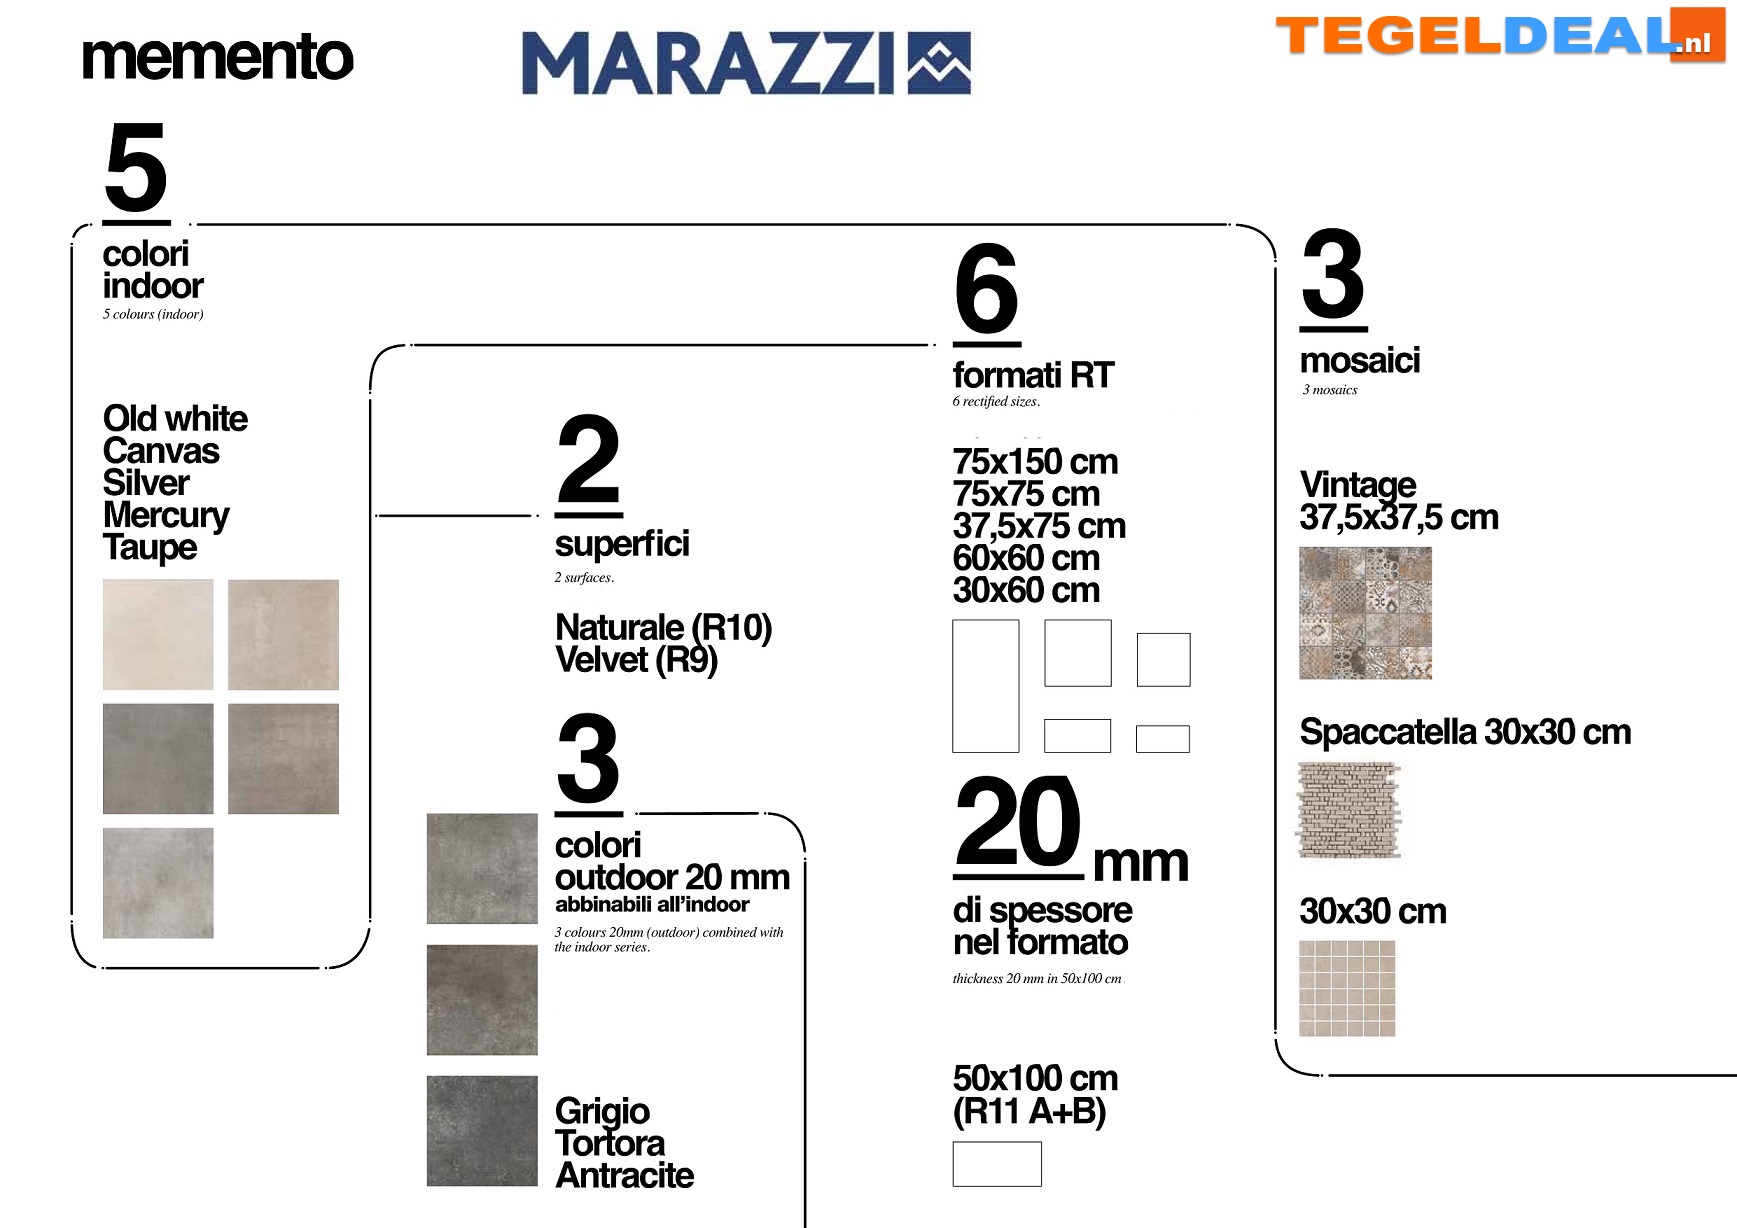 VLT Marazzi Memento, Mercury, 75 x 75 cm M032